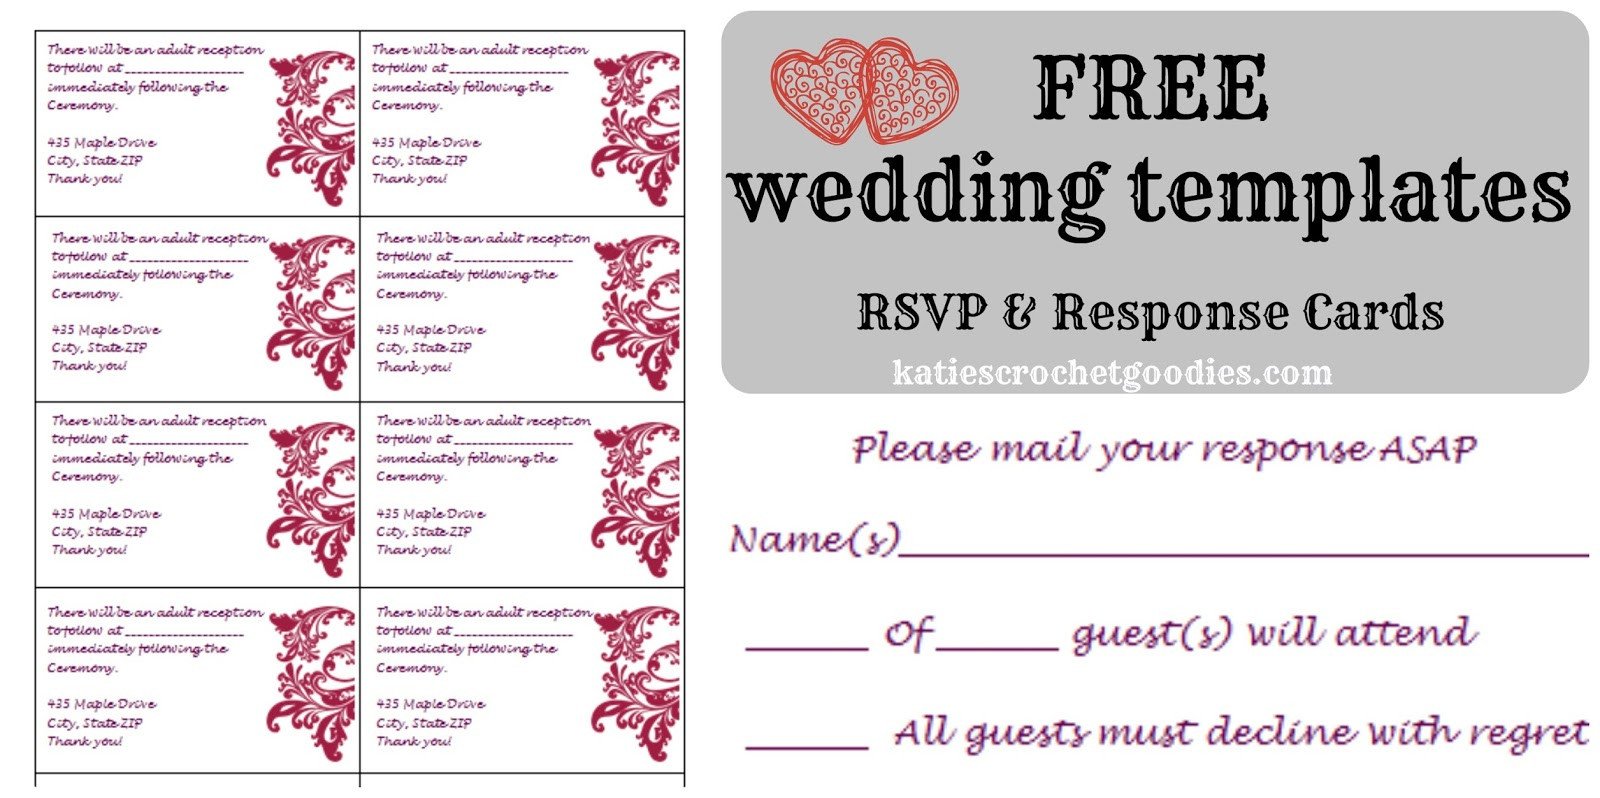 Free Wedding Templates RSVP & Reception Cards Katie s